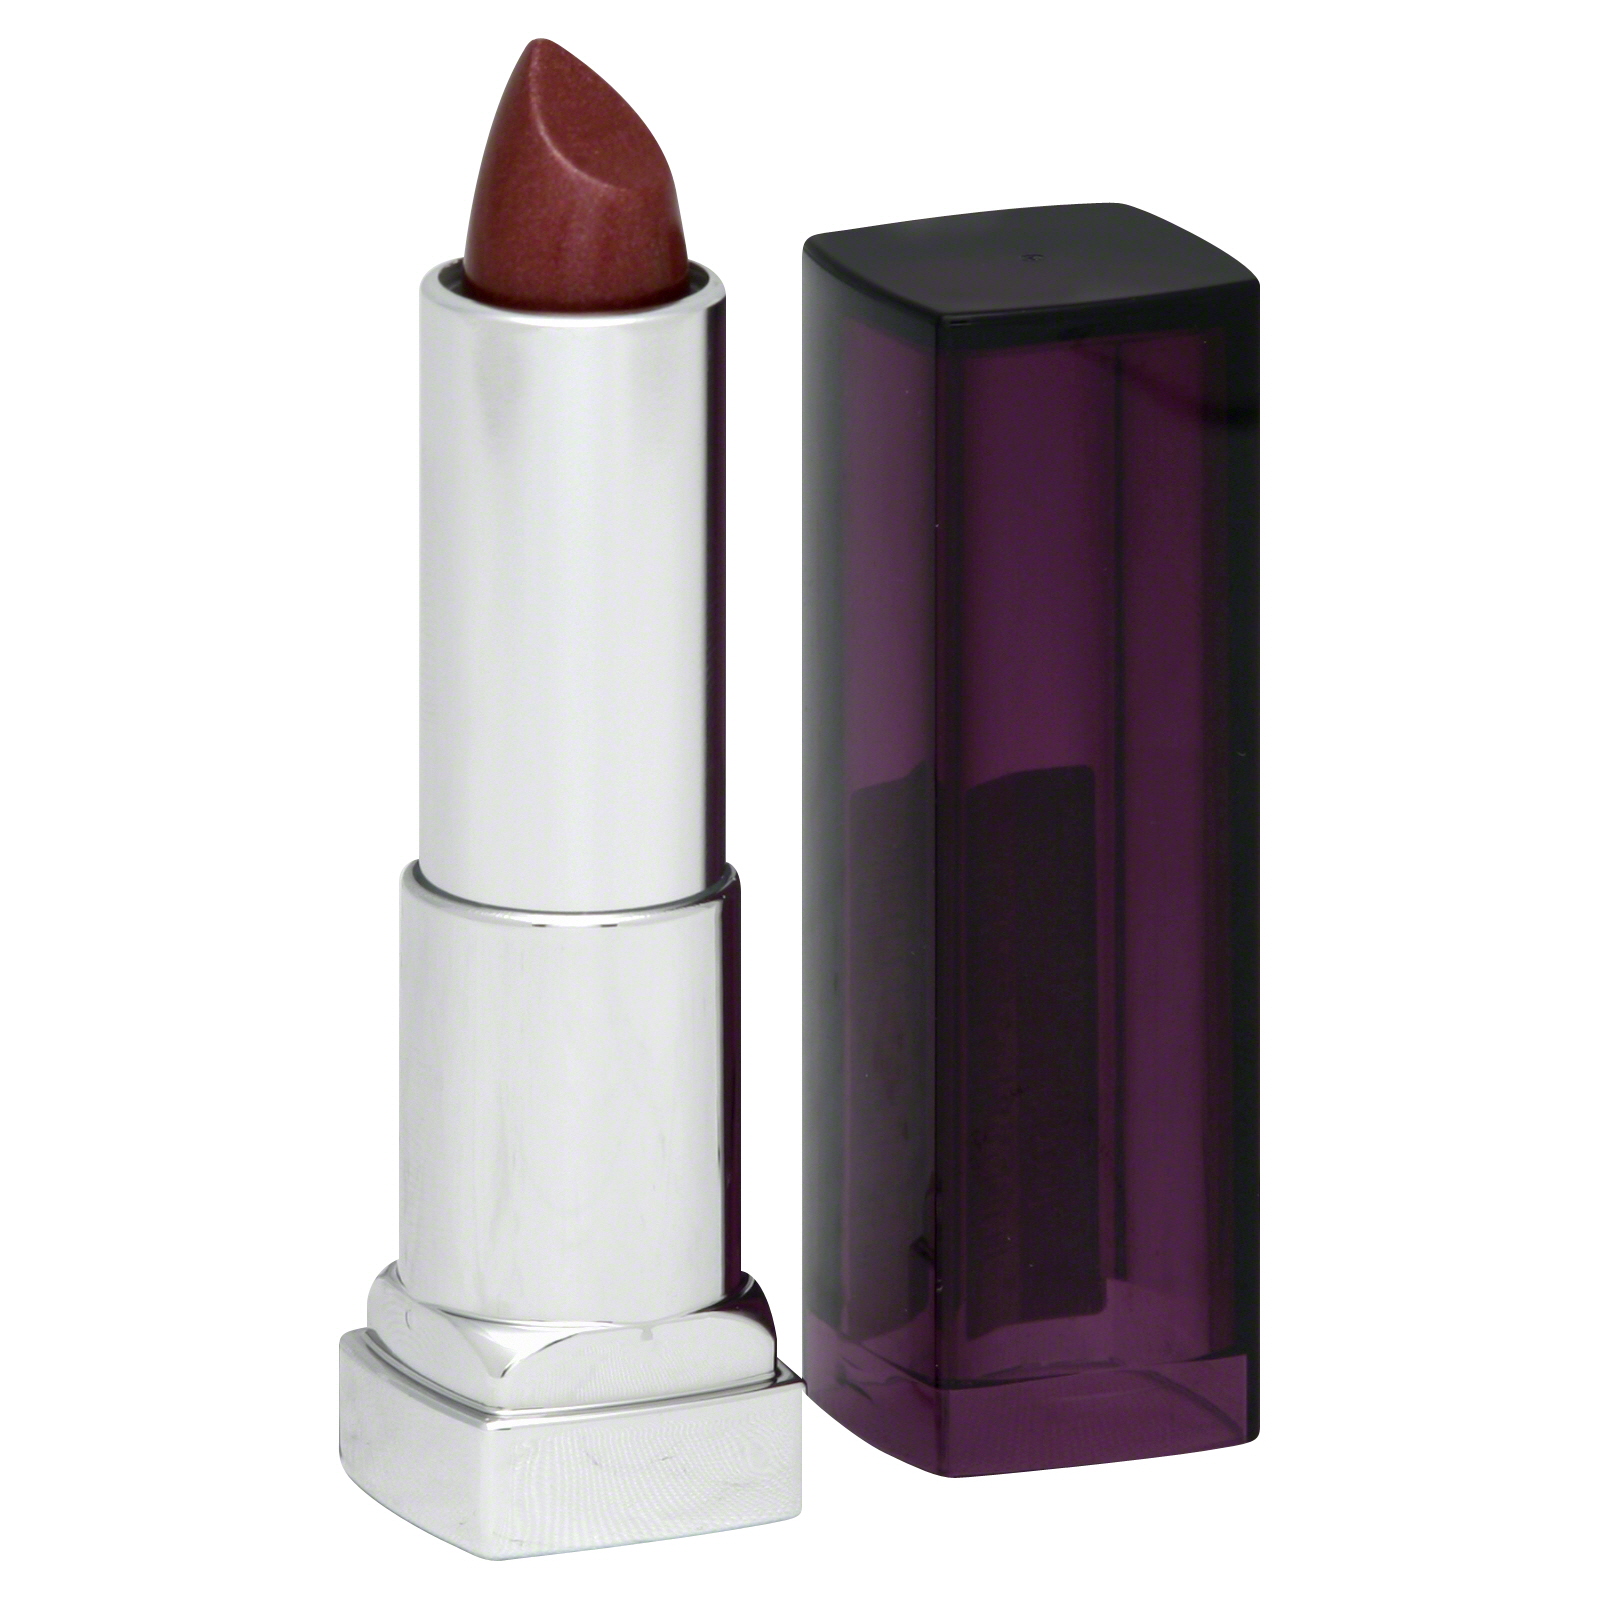 Maybelline New York Colorsensational Lip Color, Plum-Tastic 415, 0.15 oz (4.2 g)